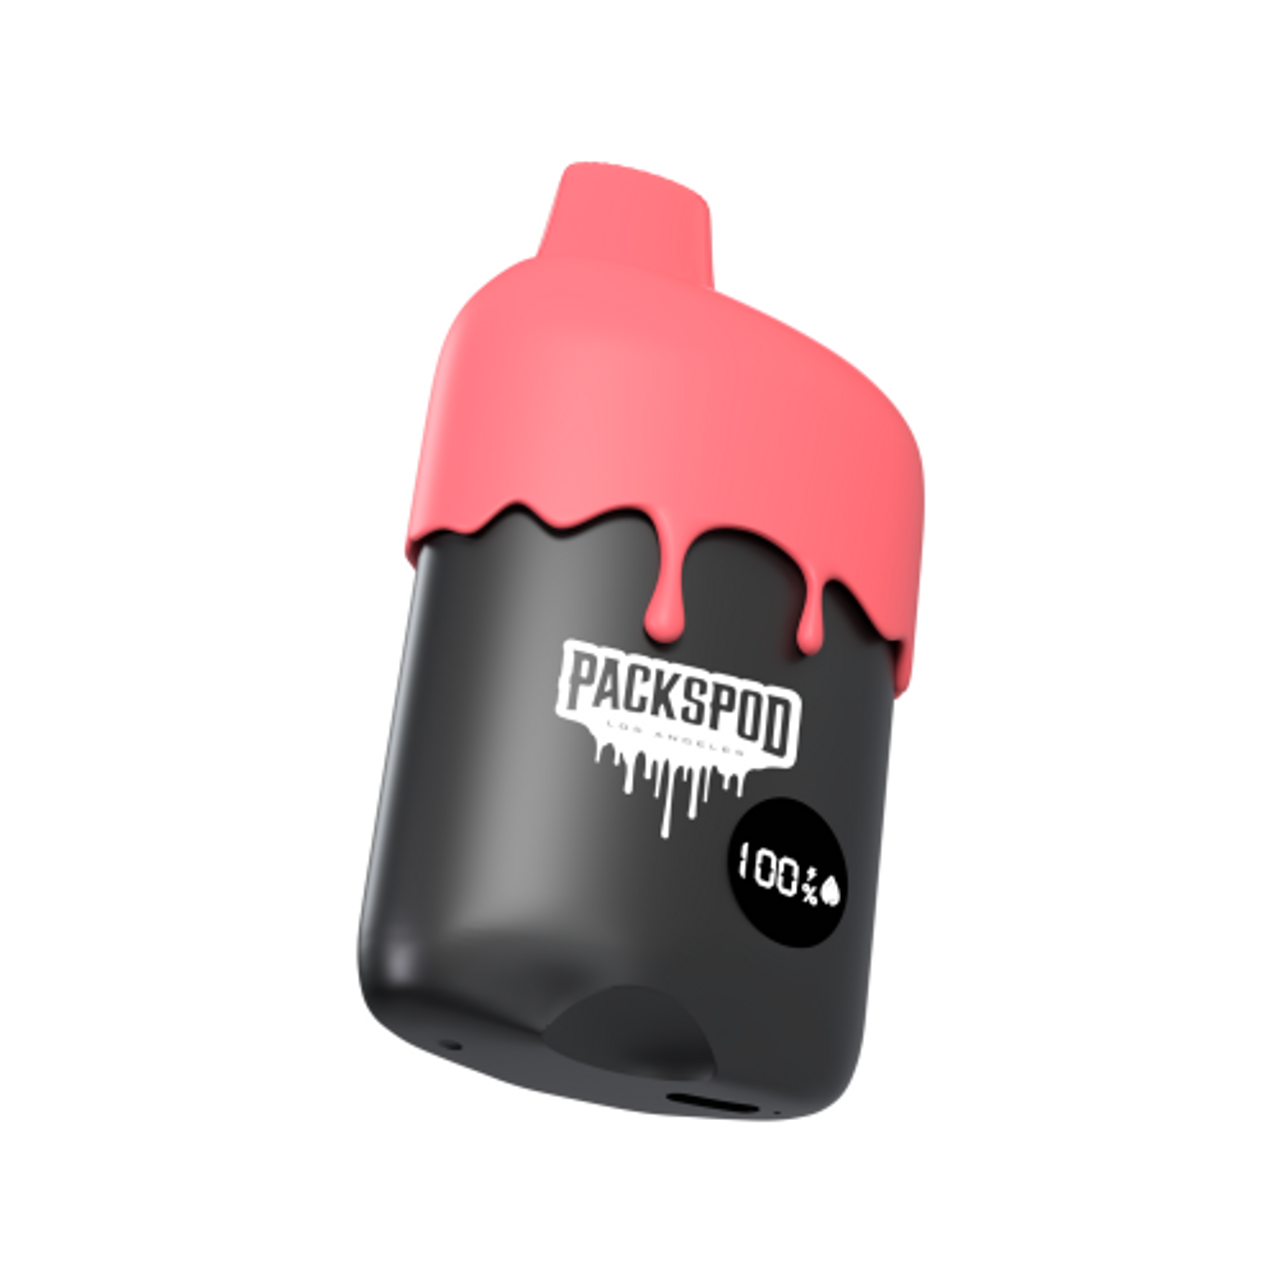 Packspod 12,000 Puffs Disposable Vape 5% 18mL Best Flavor Black Cherry Gelato